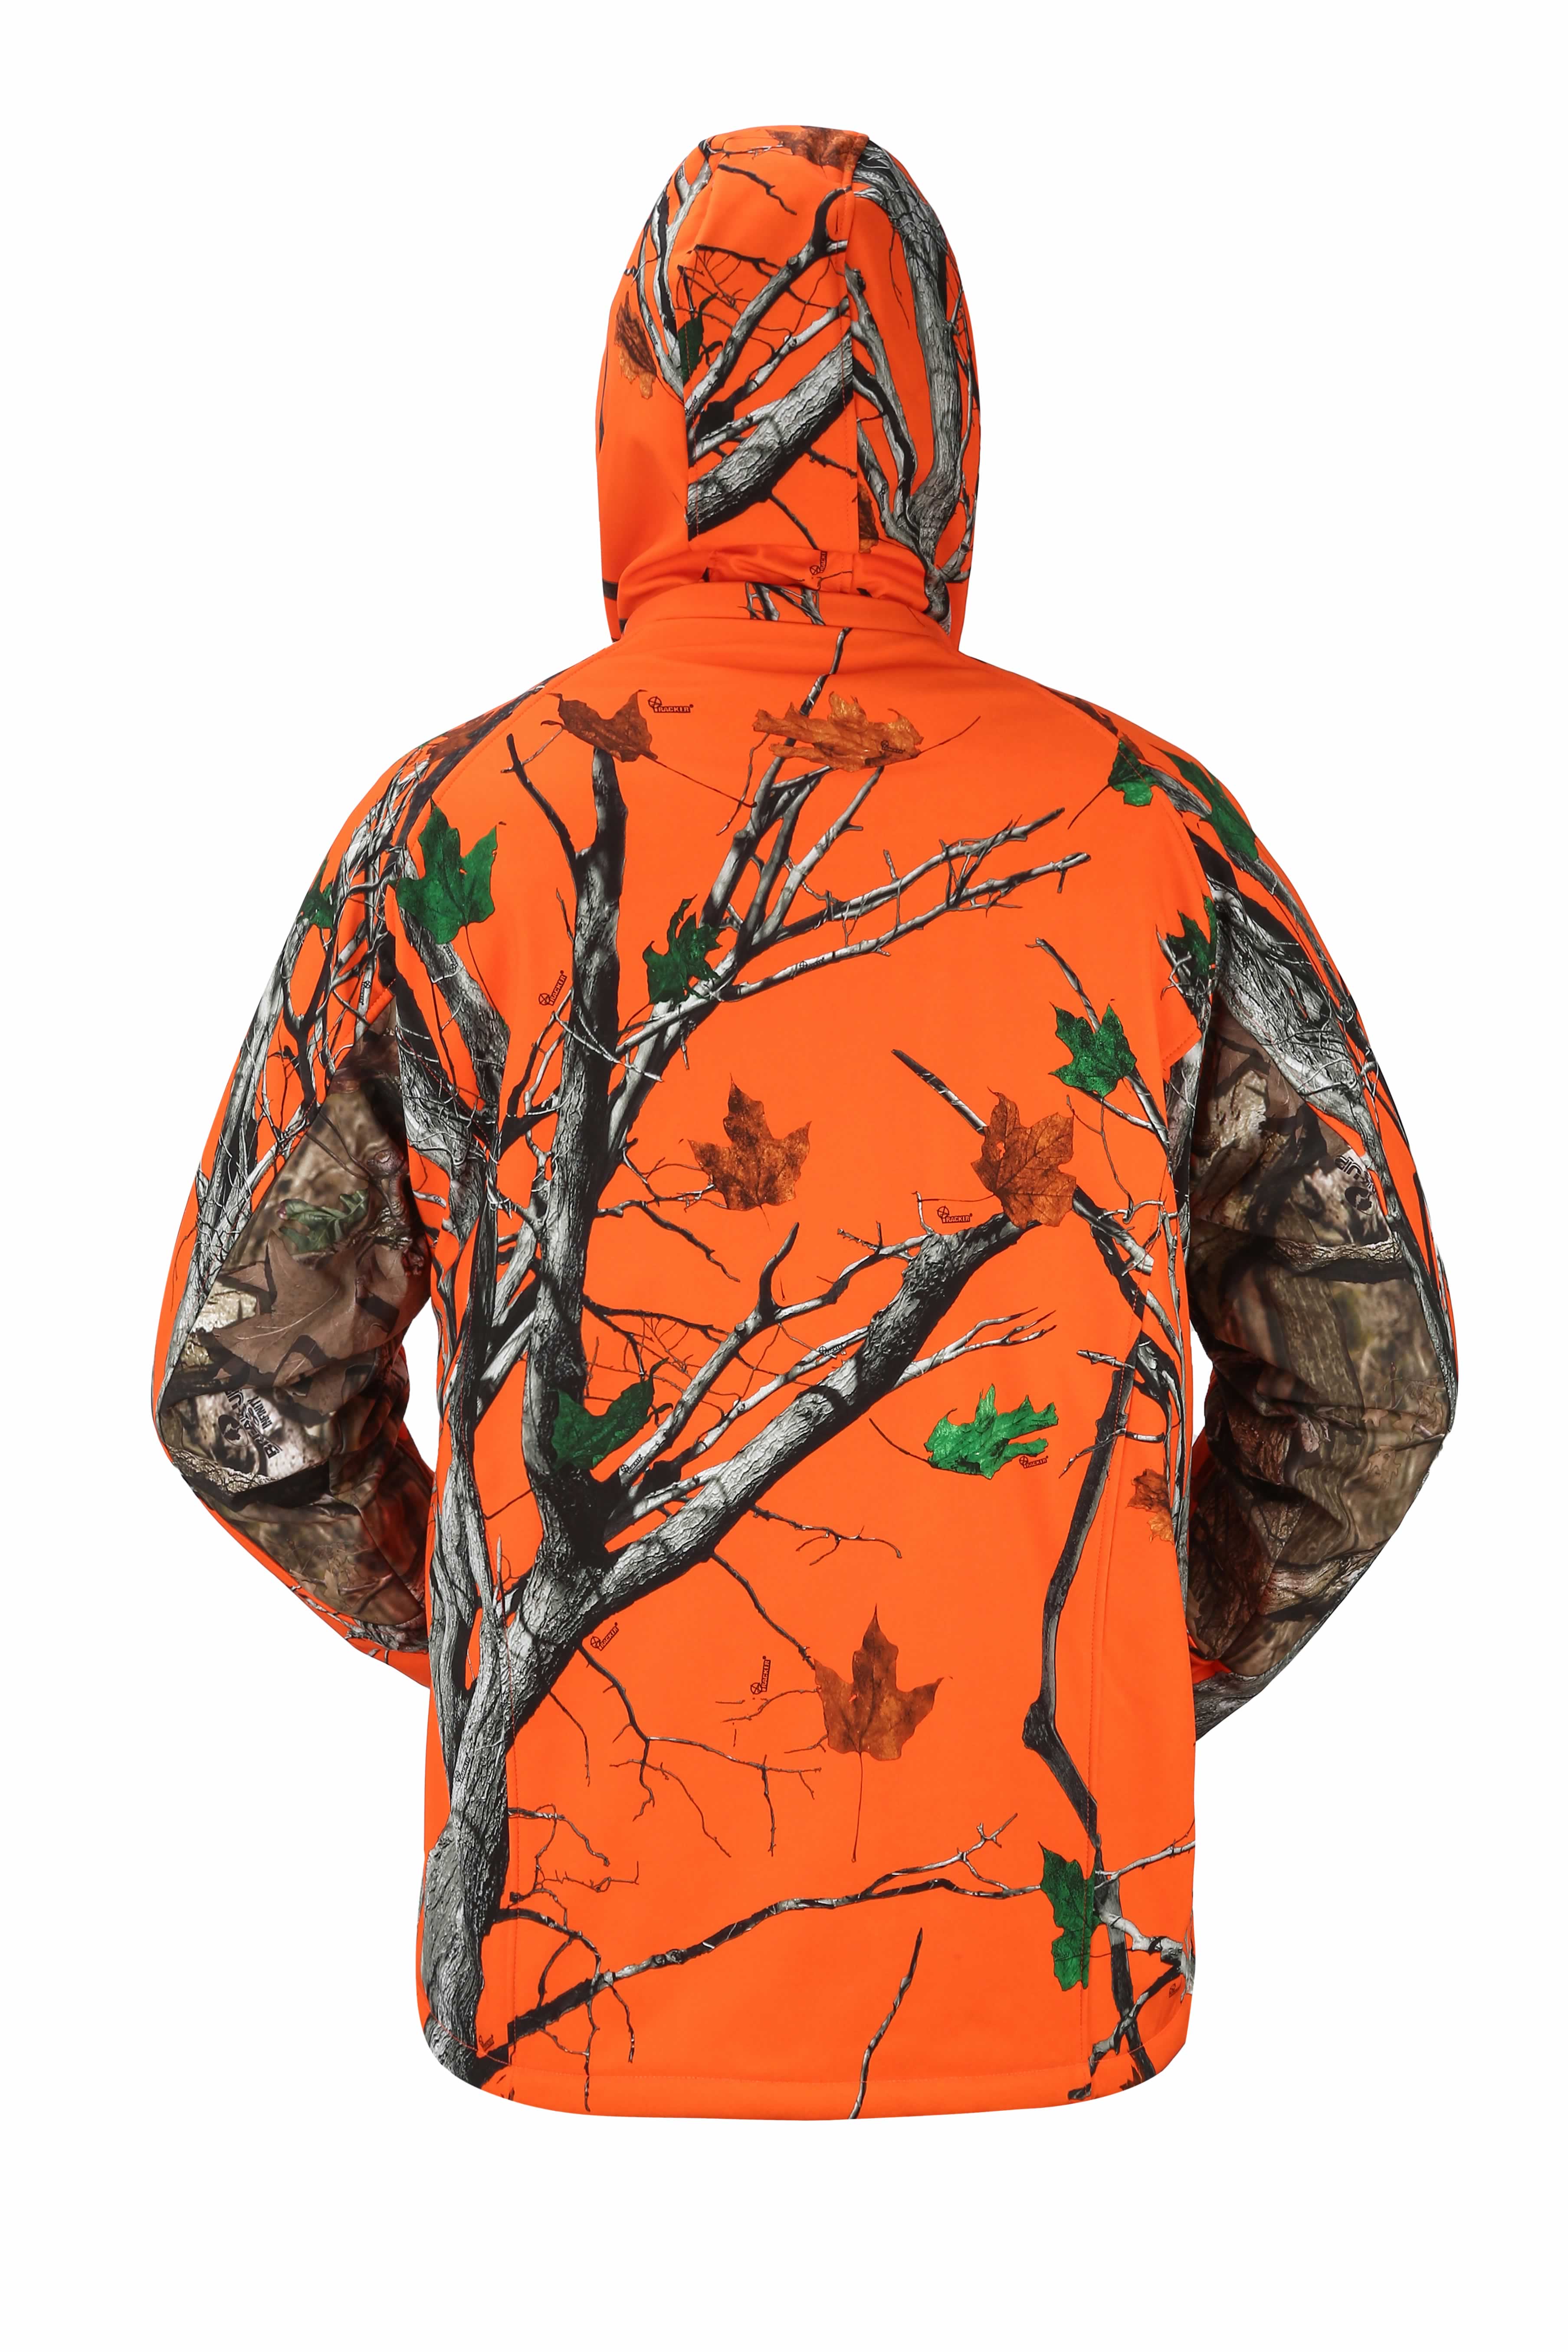 Heated hunting jacket HJ-2103-Mig Clothing Limited